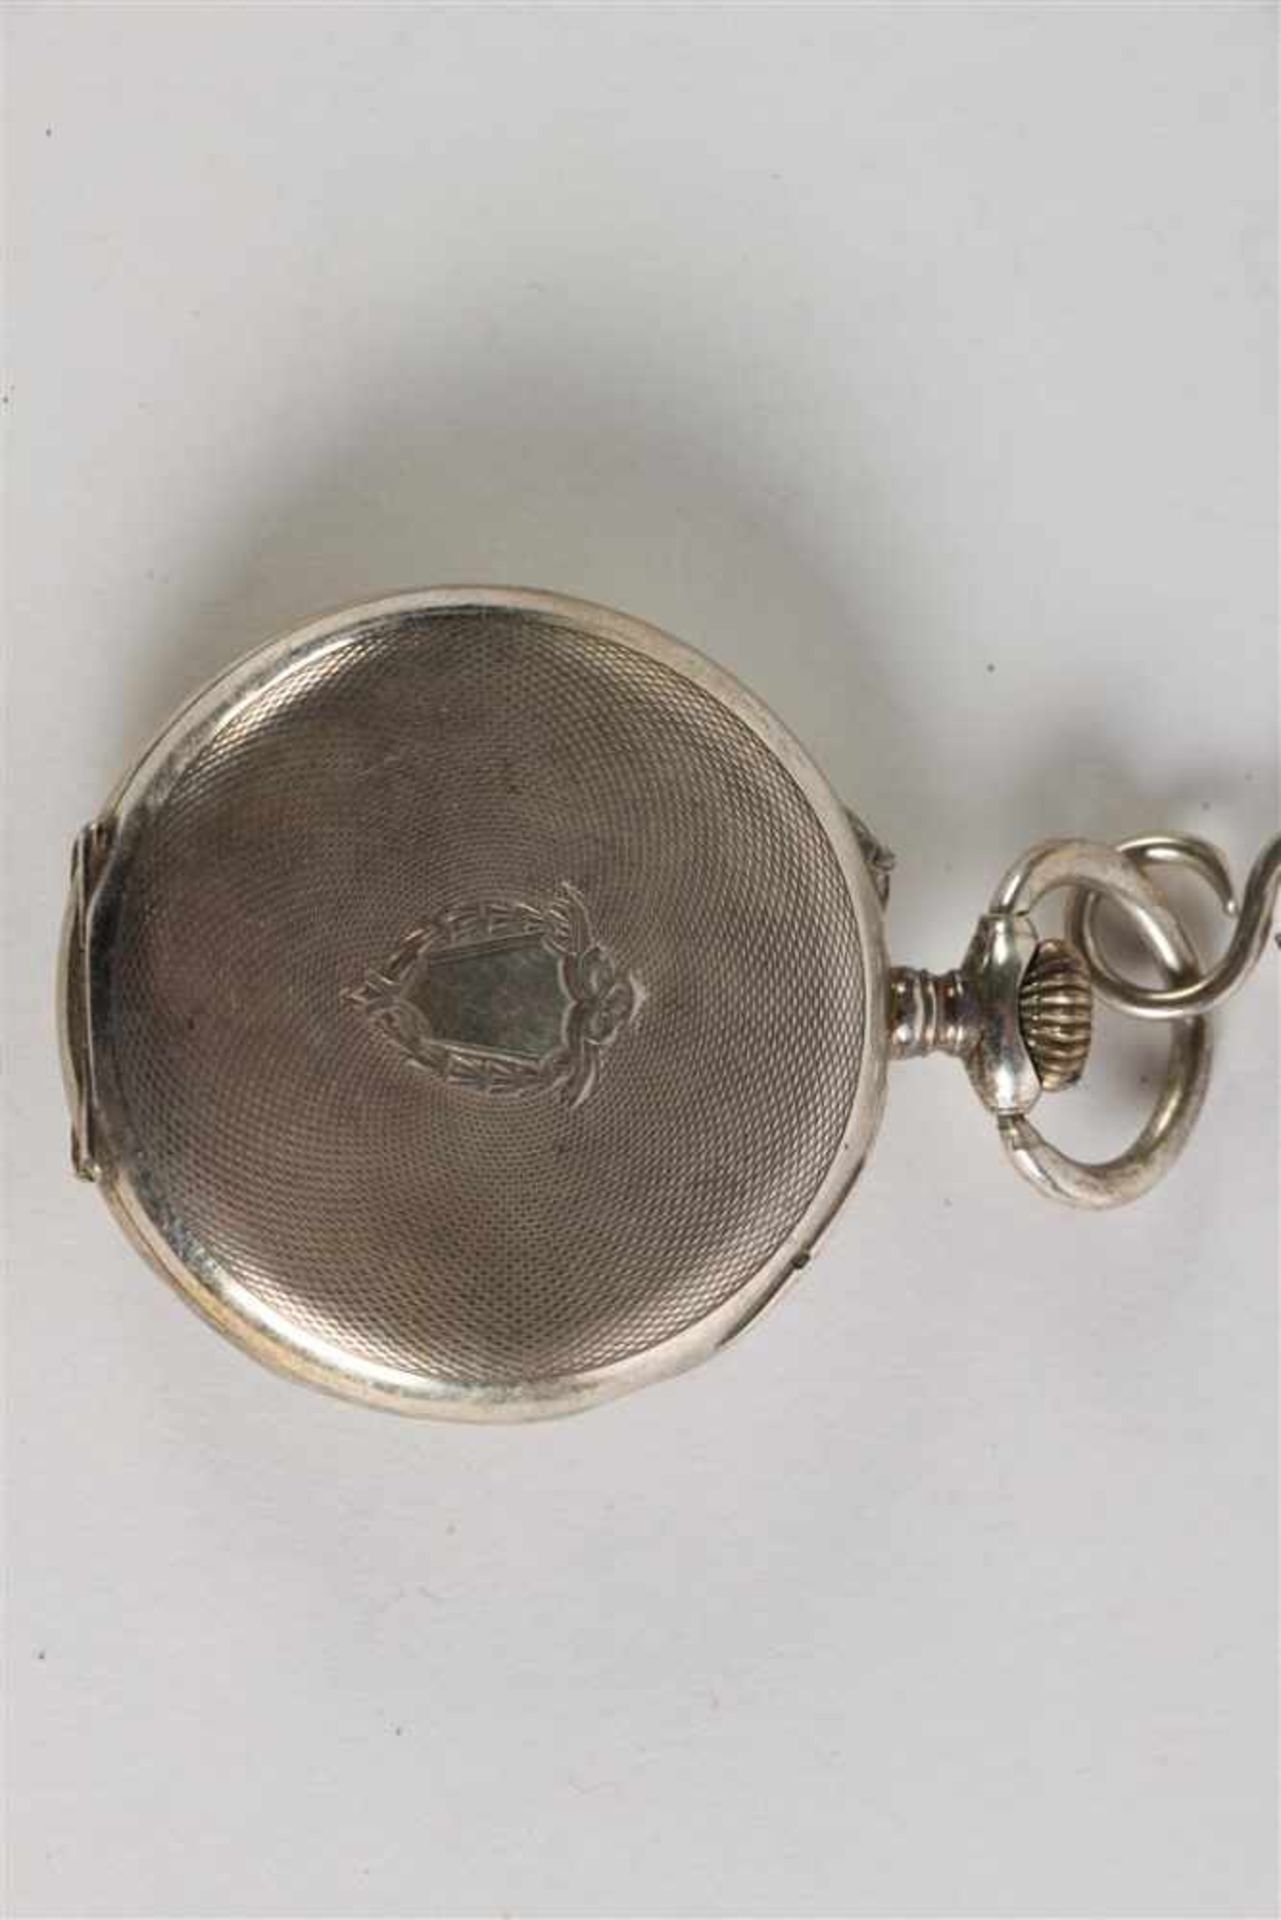 Zeeuwse chatelaine met horloge en sleutel gedecoreerd met paard en koe. L: 34 cm. - Bild 3 aus 4